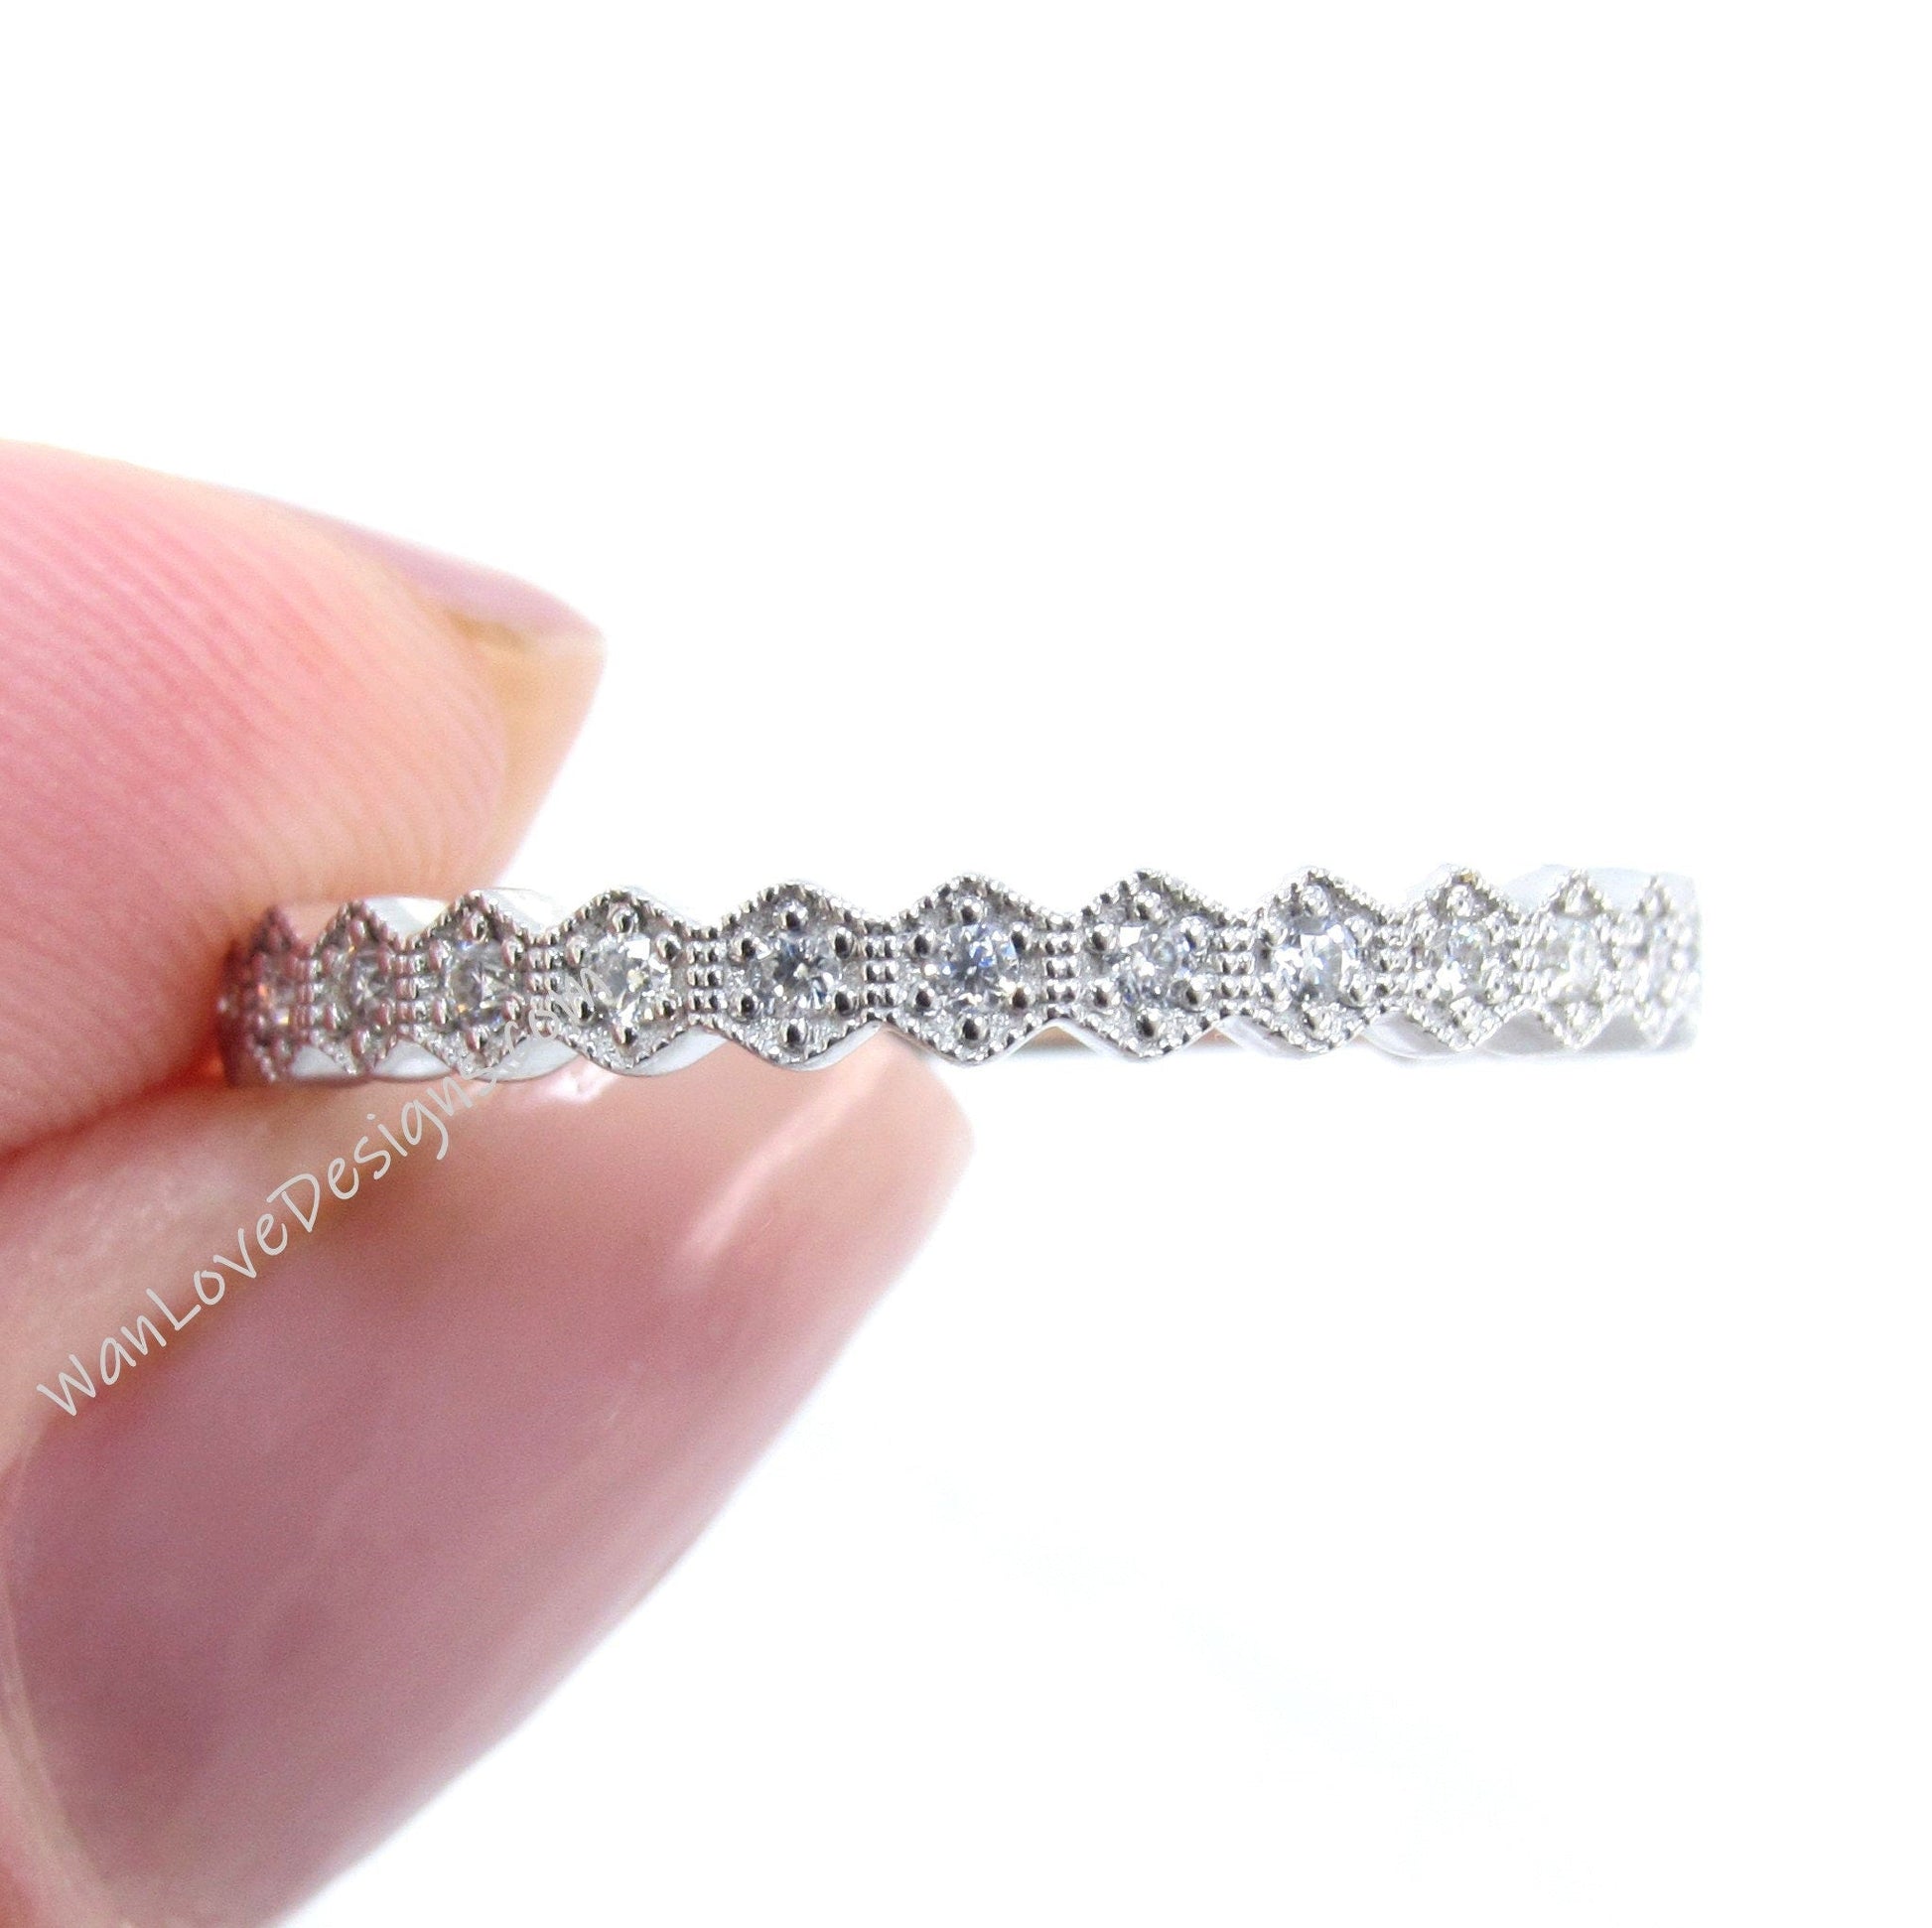 Moissanite Diamond Wedding Ring, Hexagon Shape Wedding Band, Vintage Wedding Ring, Anniversary Gift, Handmade Ring, Gift for Her, Bride Wan Love Designs